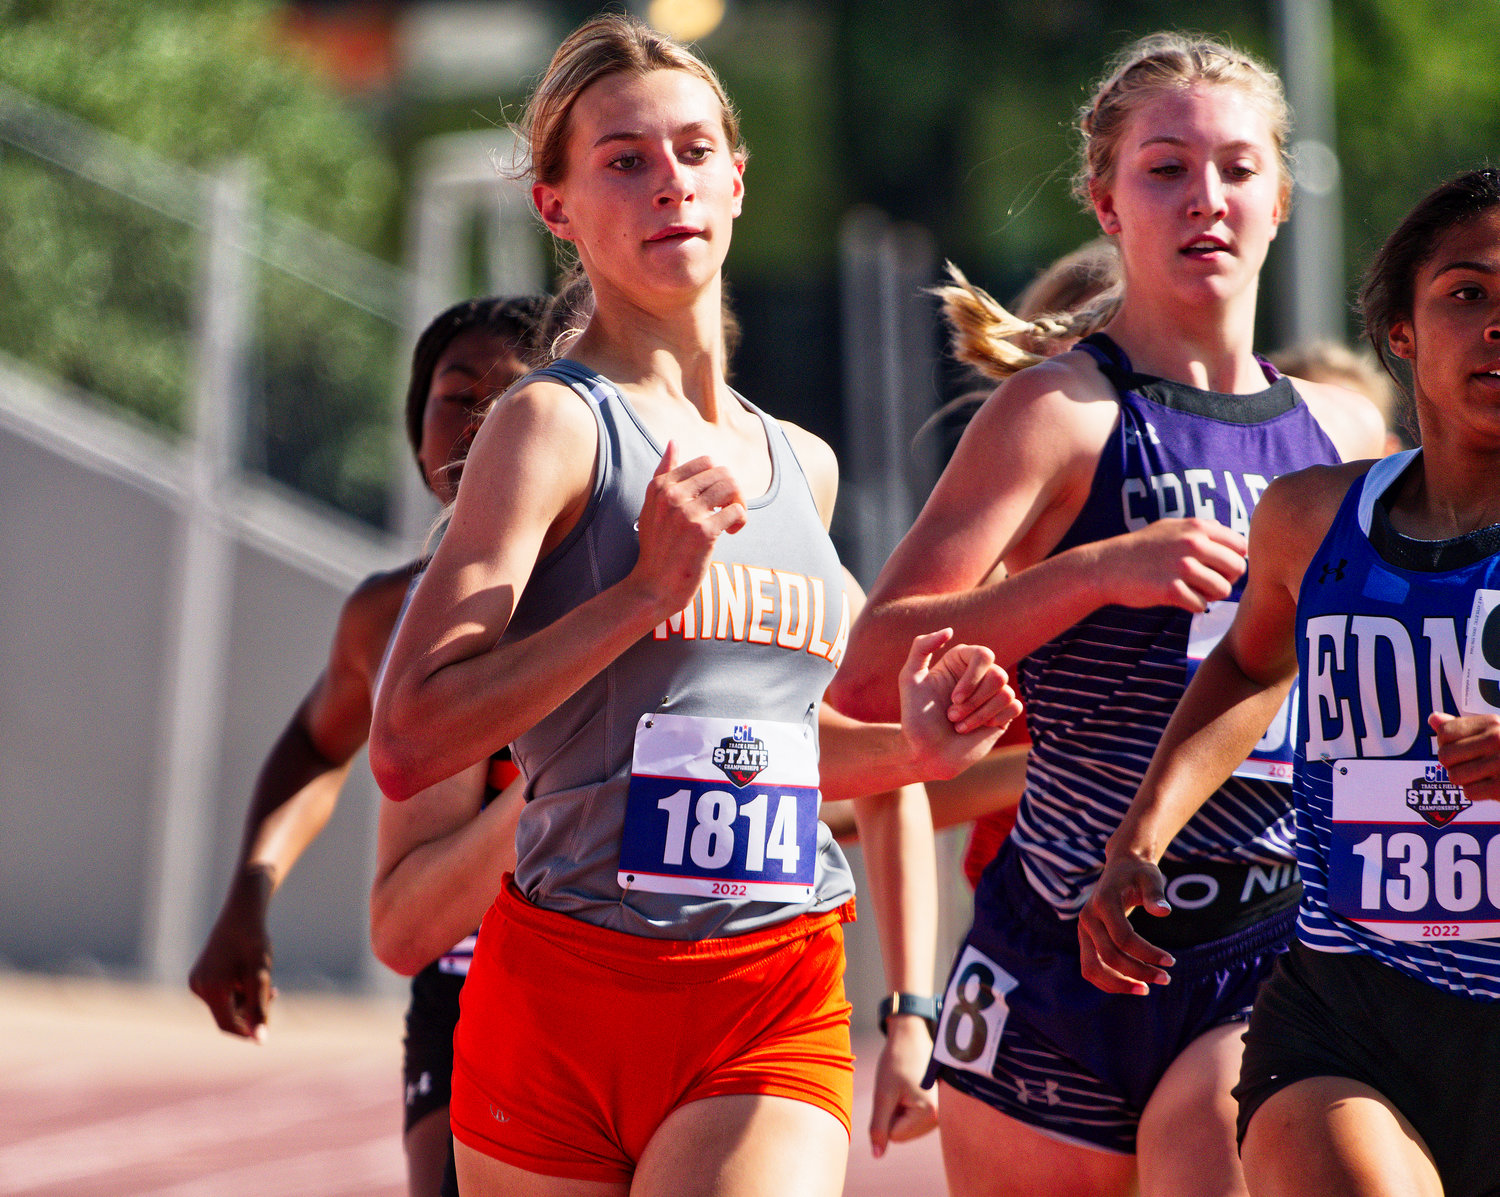 Olivia Hughes runs the 800 meter race. [see more sprinters, soarers]